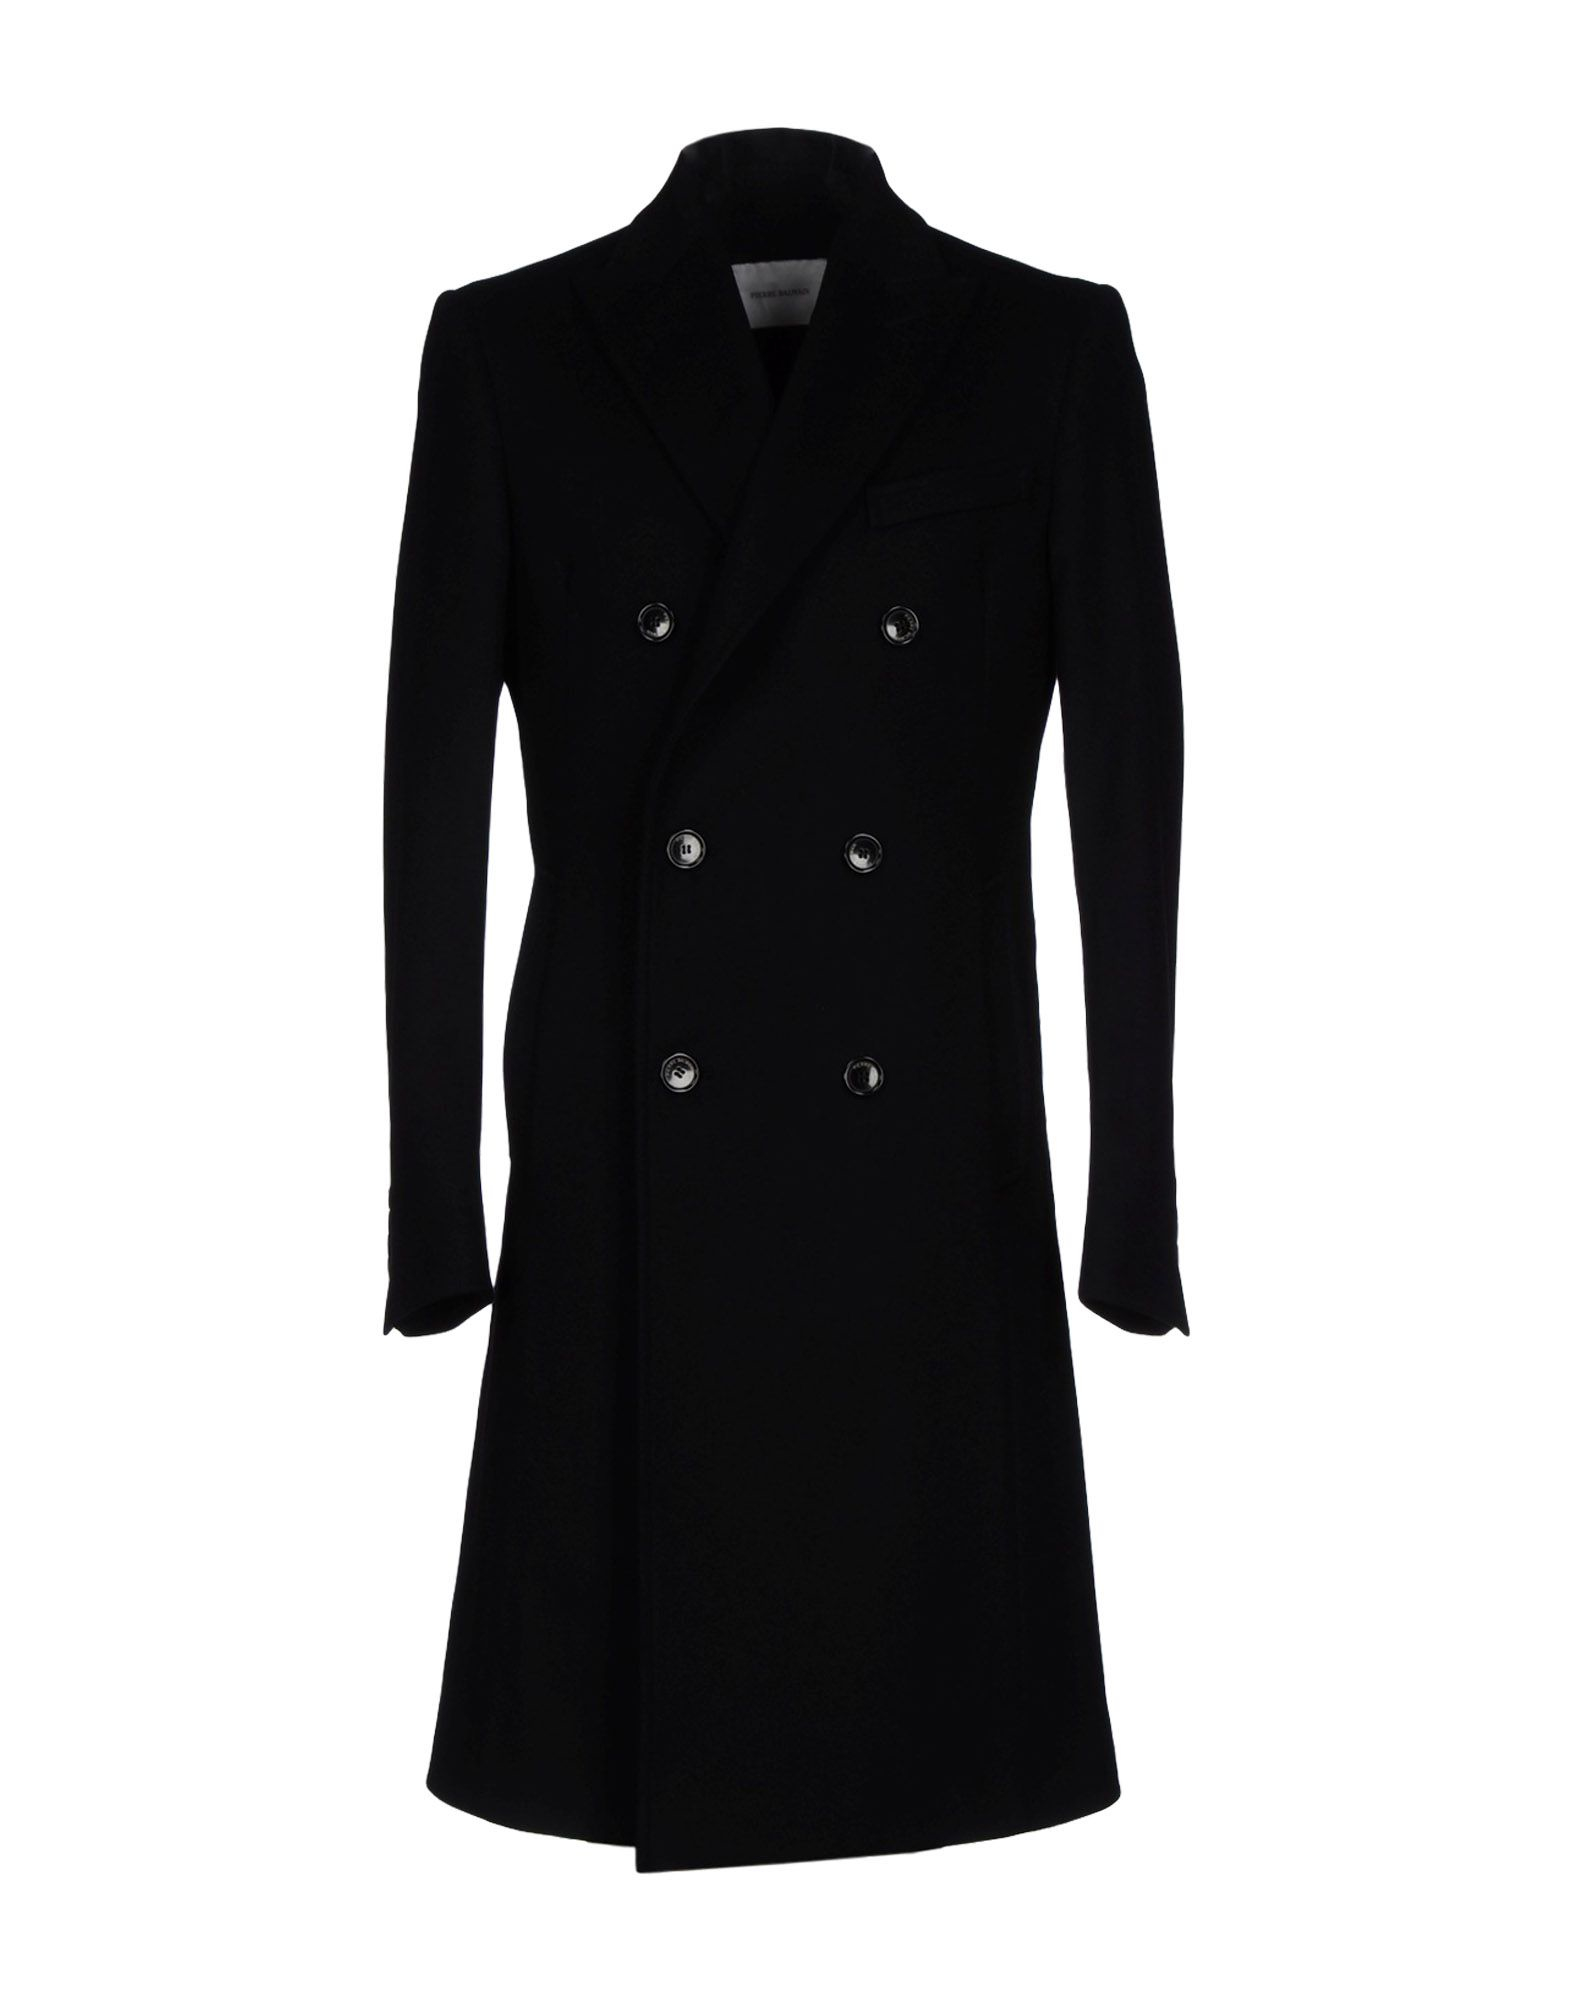 Lyst - Balmain Coat in Black for Men